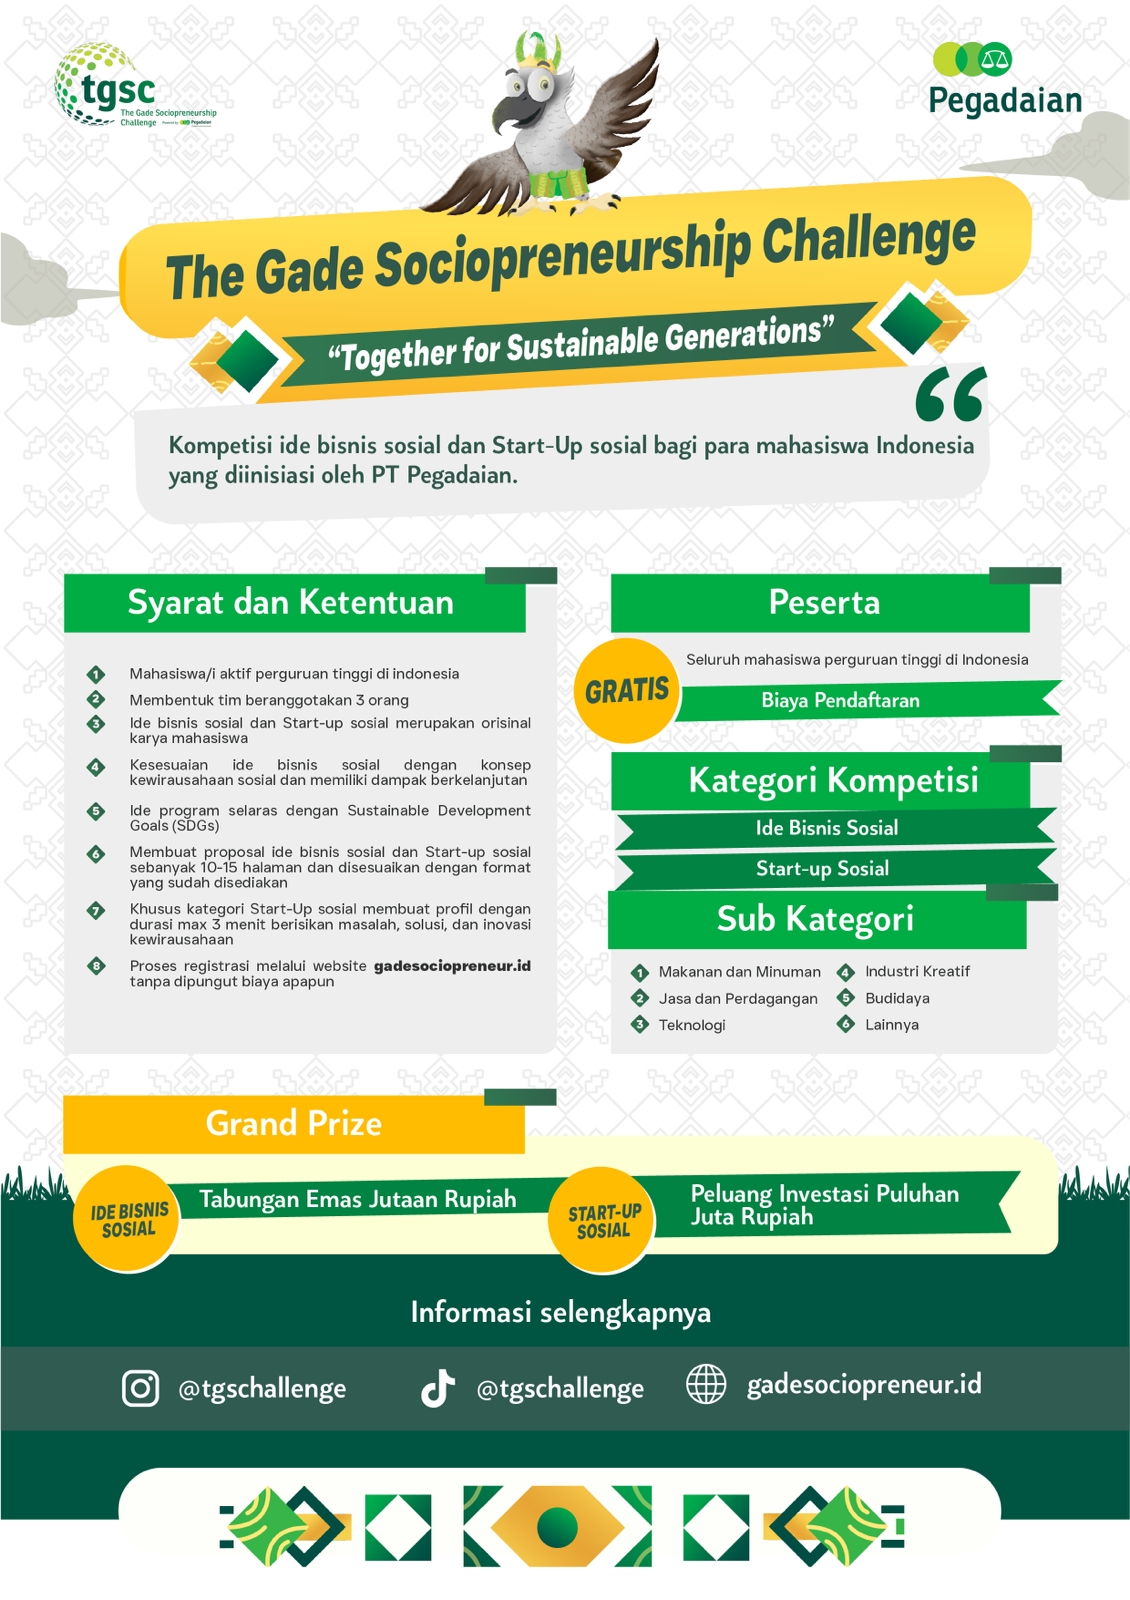 The Gade Sociopreneurship Challenge